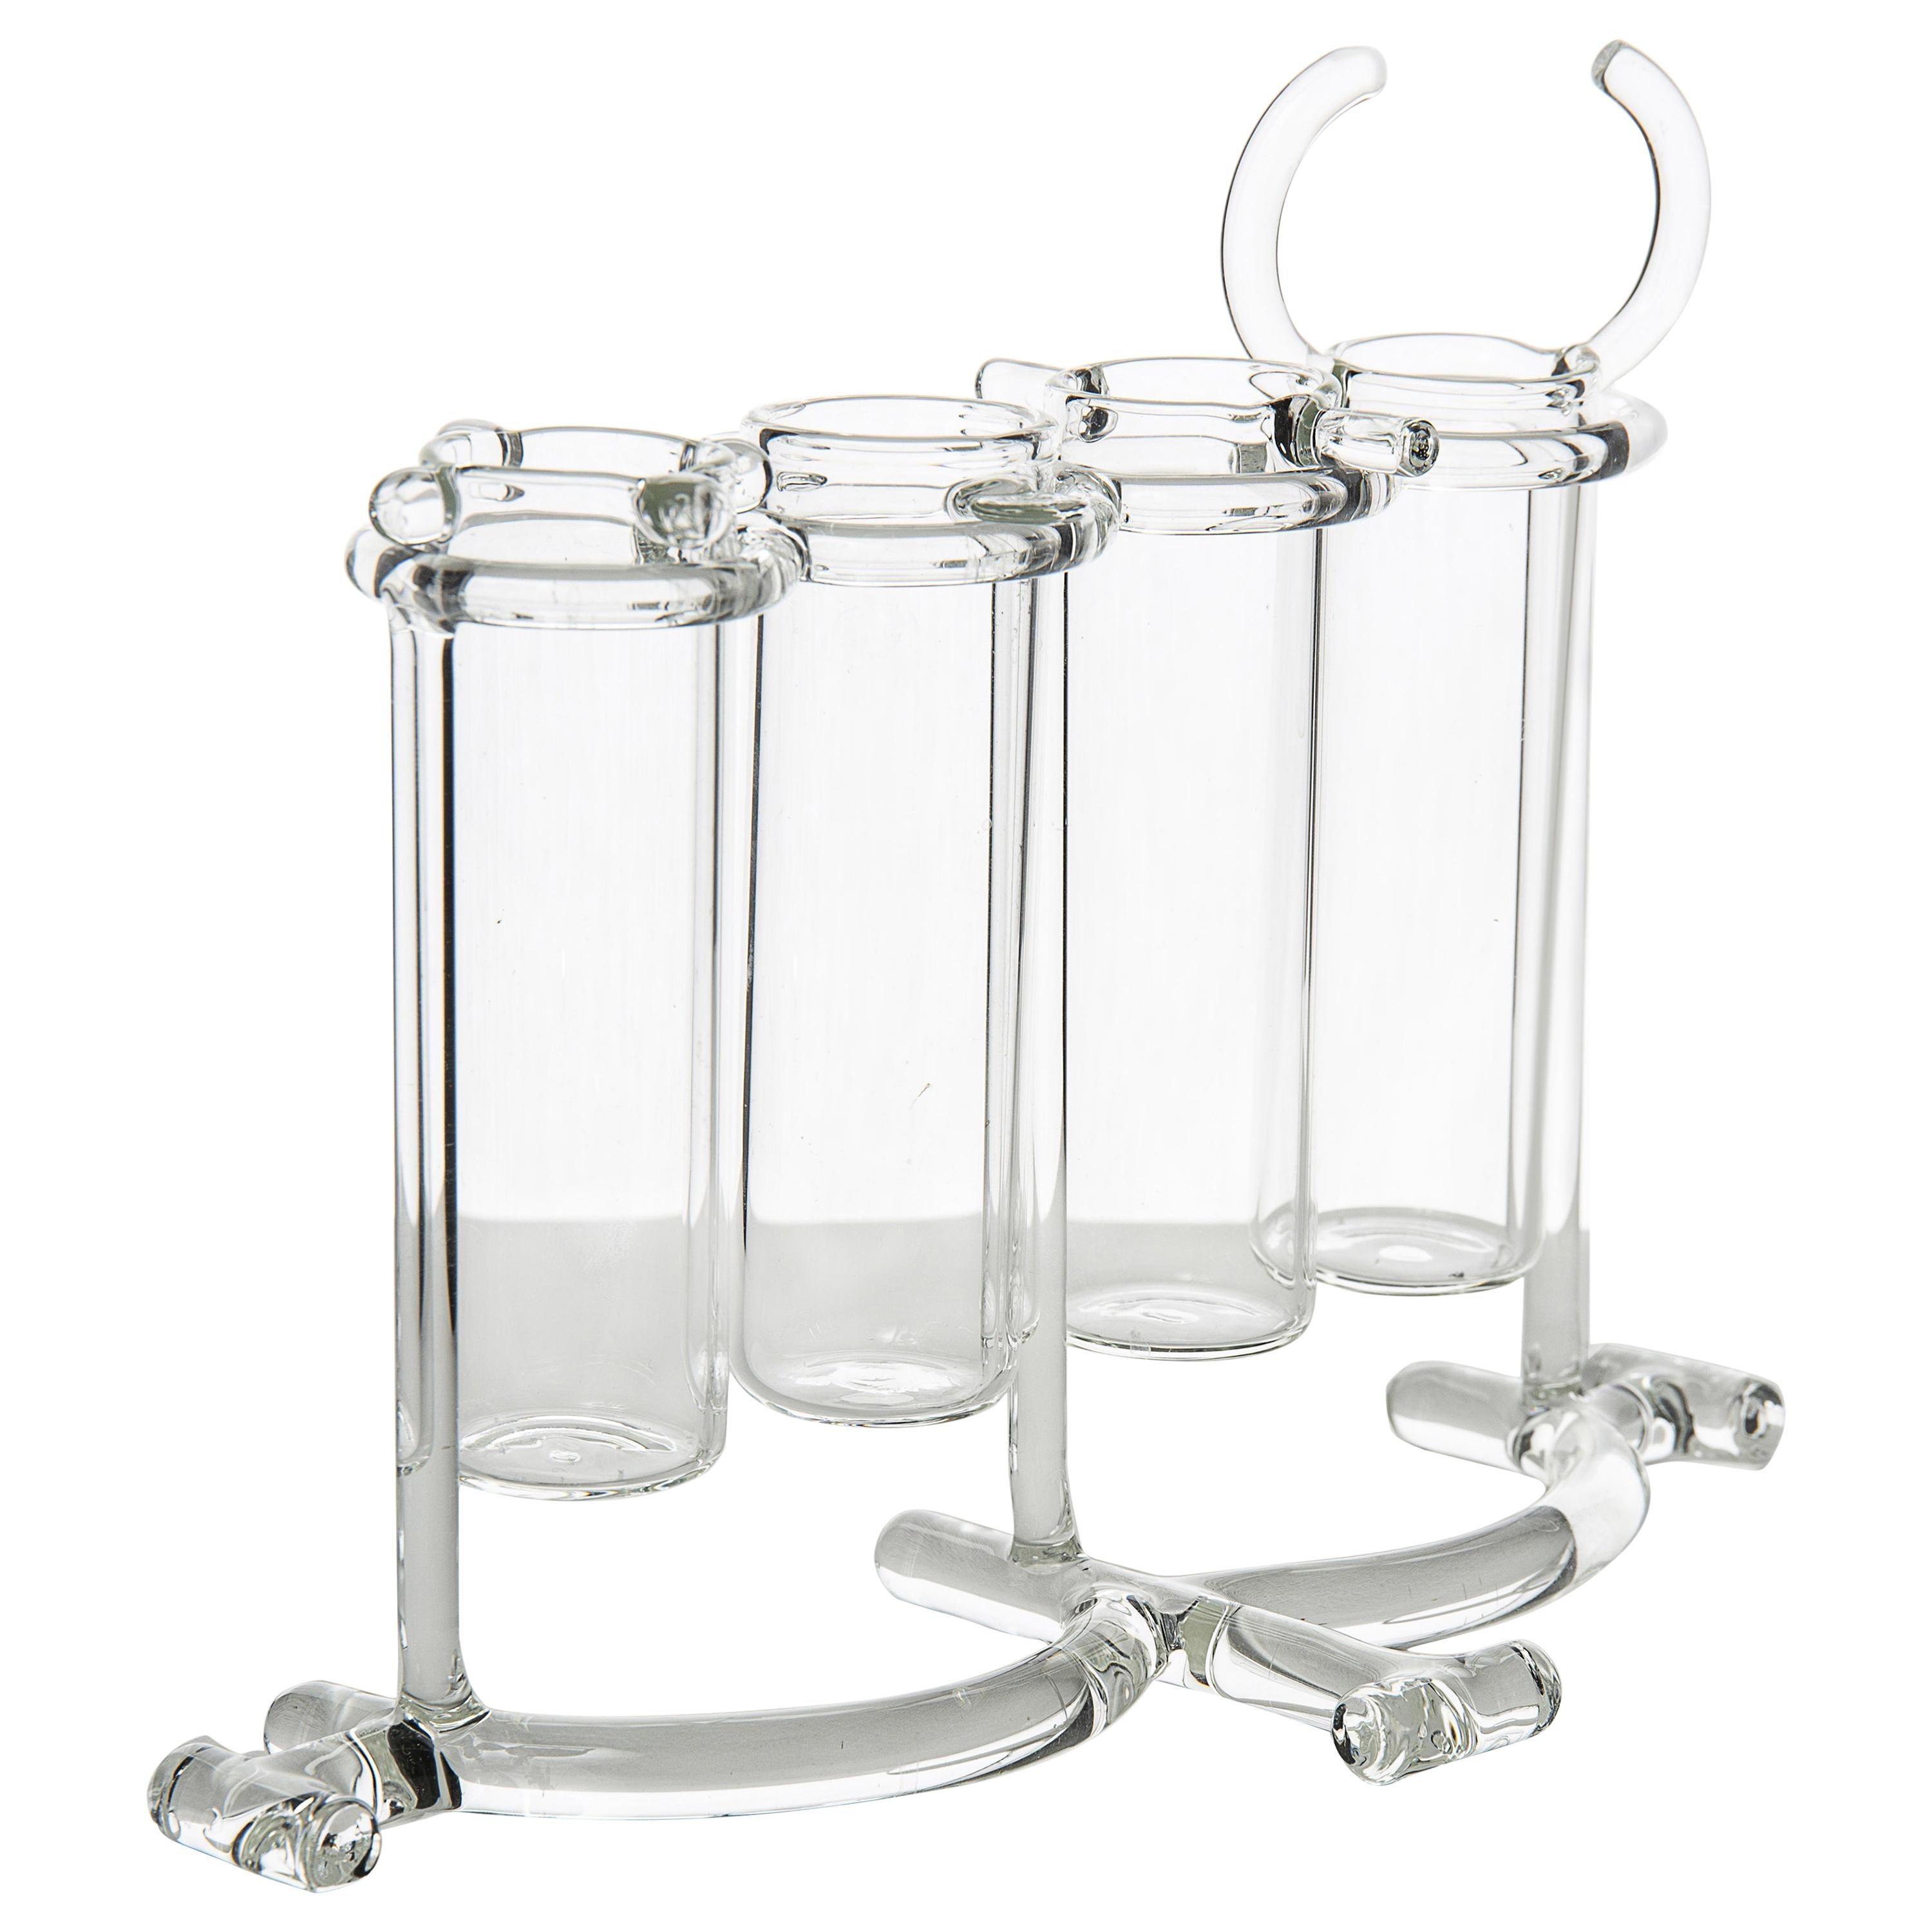 Contemporary Flower Vases or Spice Rack Tableware Kitchen Set Glass Handmade